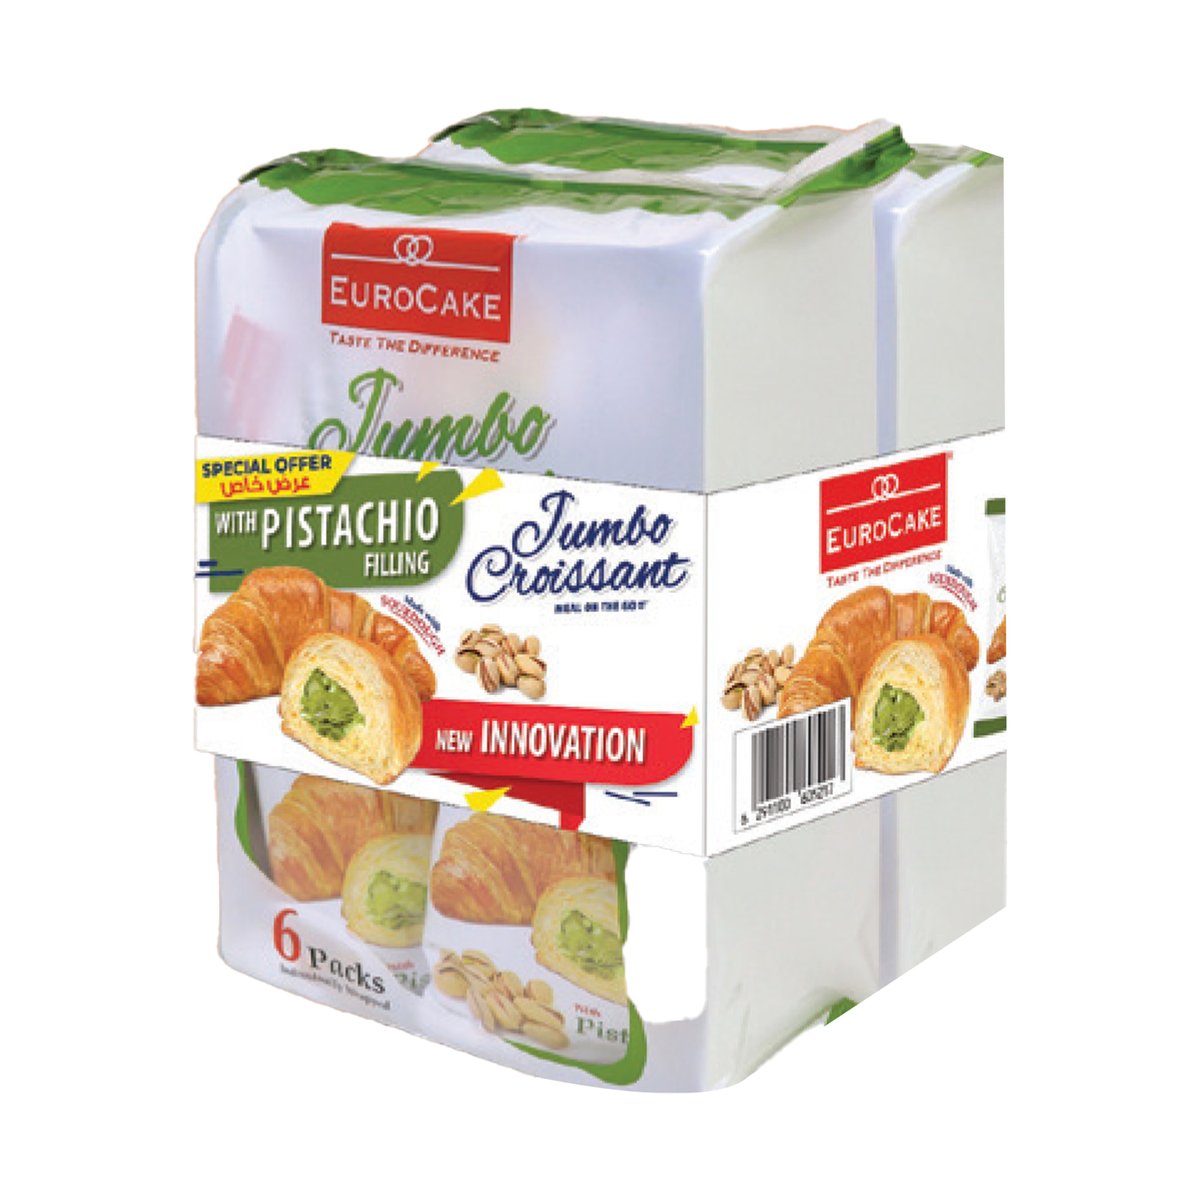 Euro Cake Pistachio Croissant Jumbo Value Pack 2 x 300 g